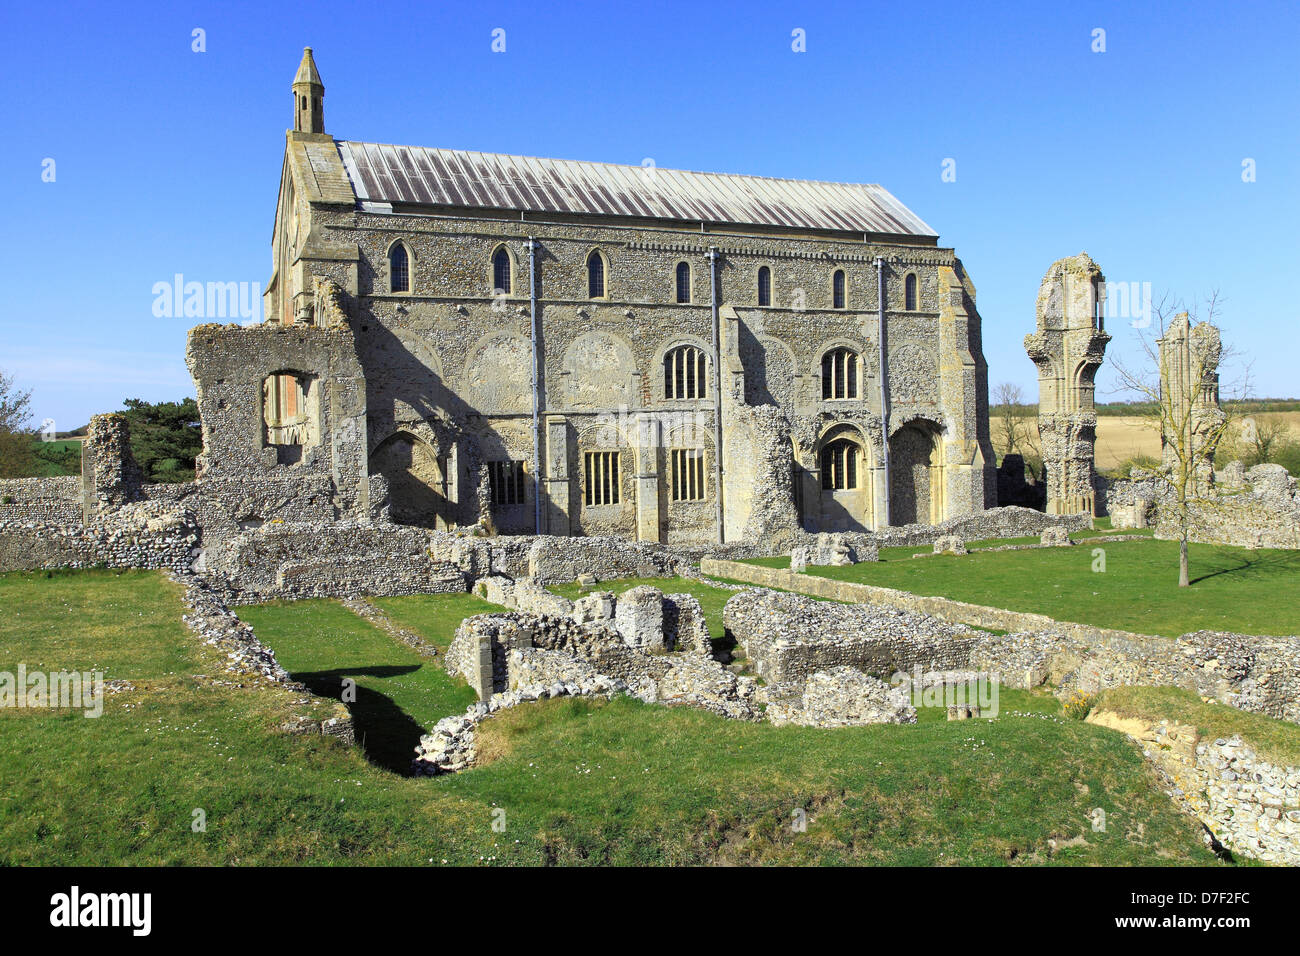 Binham Priory, Norfolk, Church and Monastic ruins, English medieval architecture, England UK, Benedictine Order Stock Photo